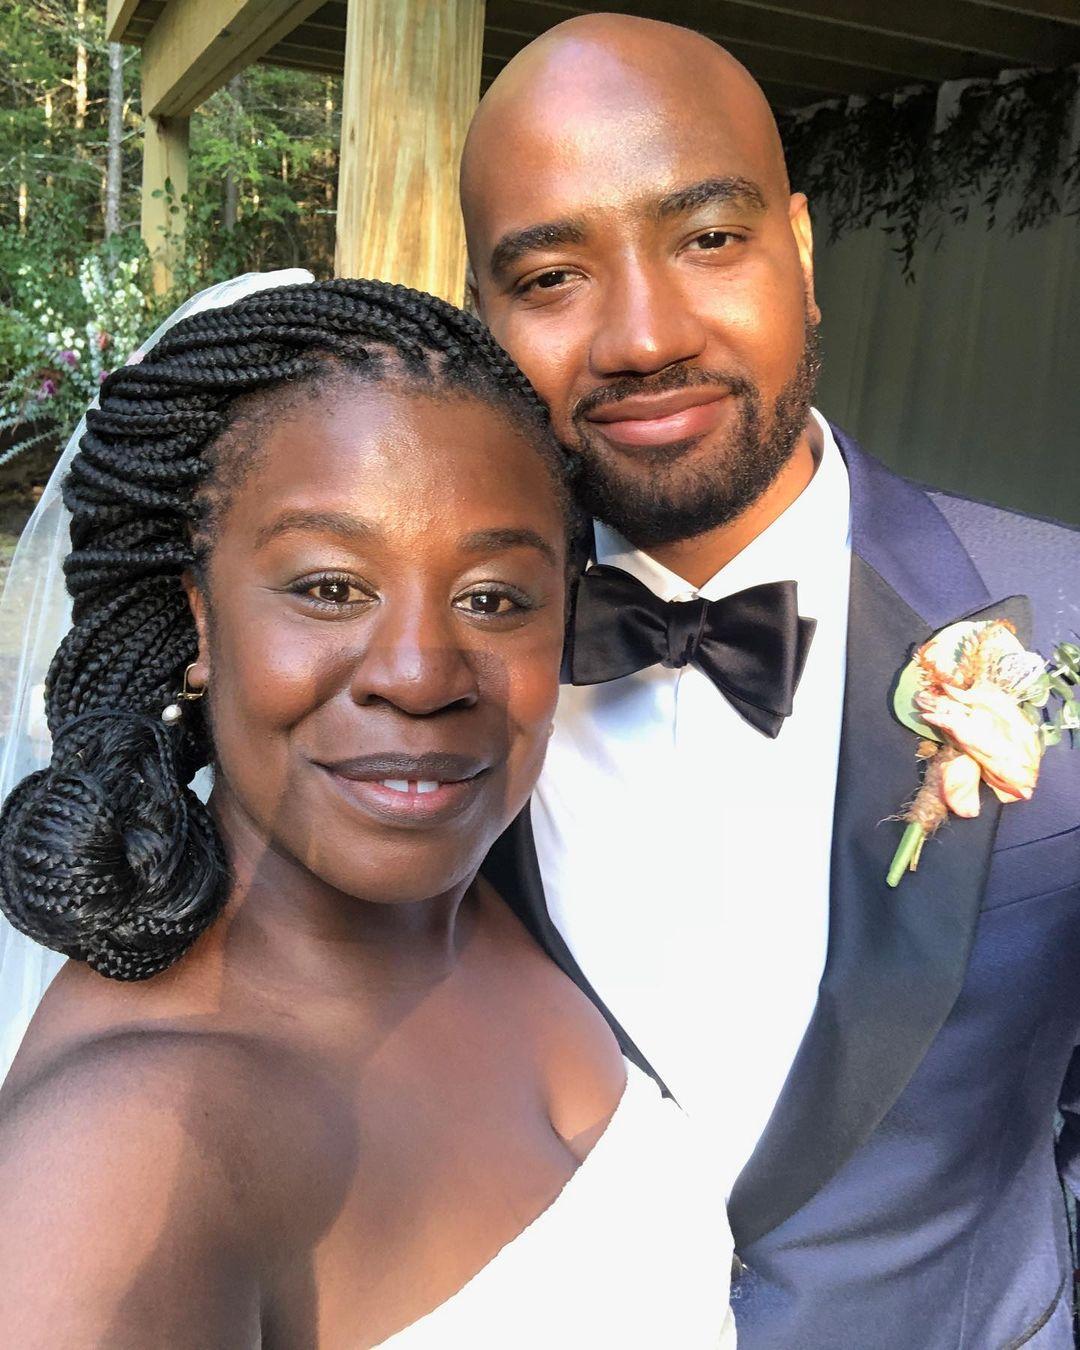 Uzo Aduba shocked fans with news of her and her husband Robert Sweeting's wedding